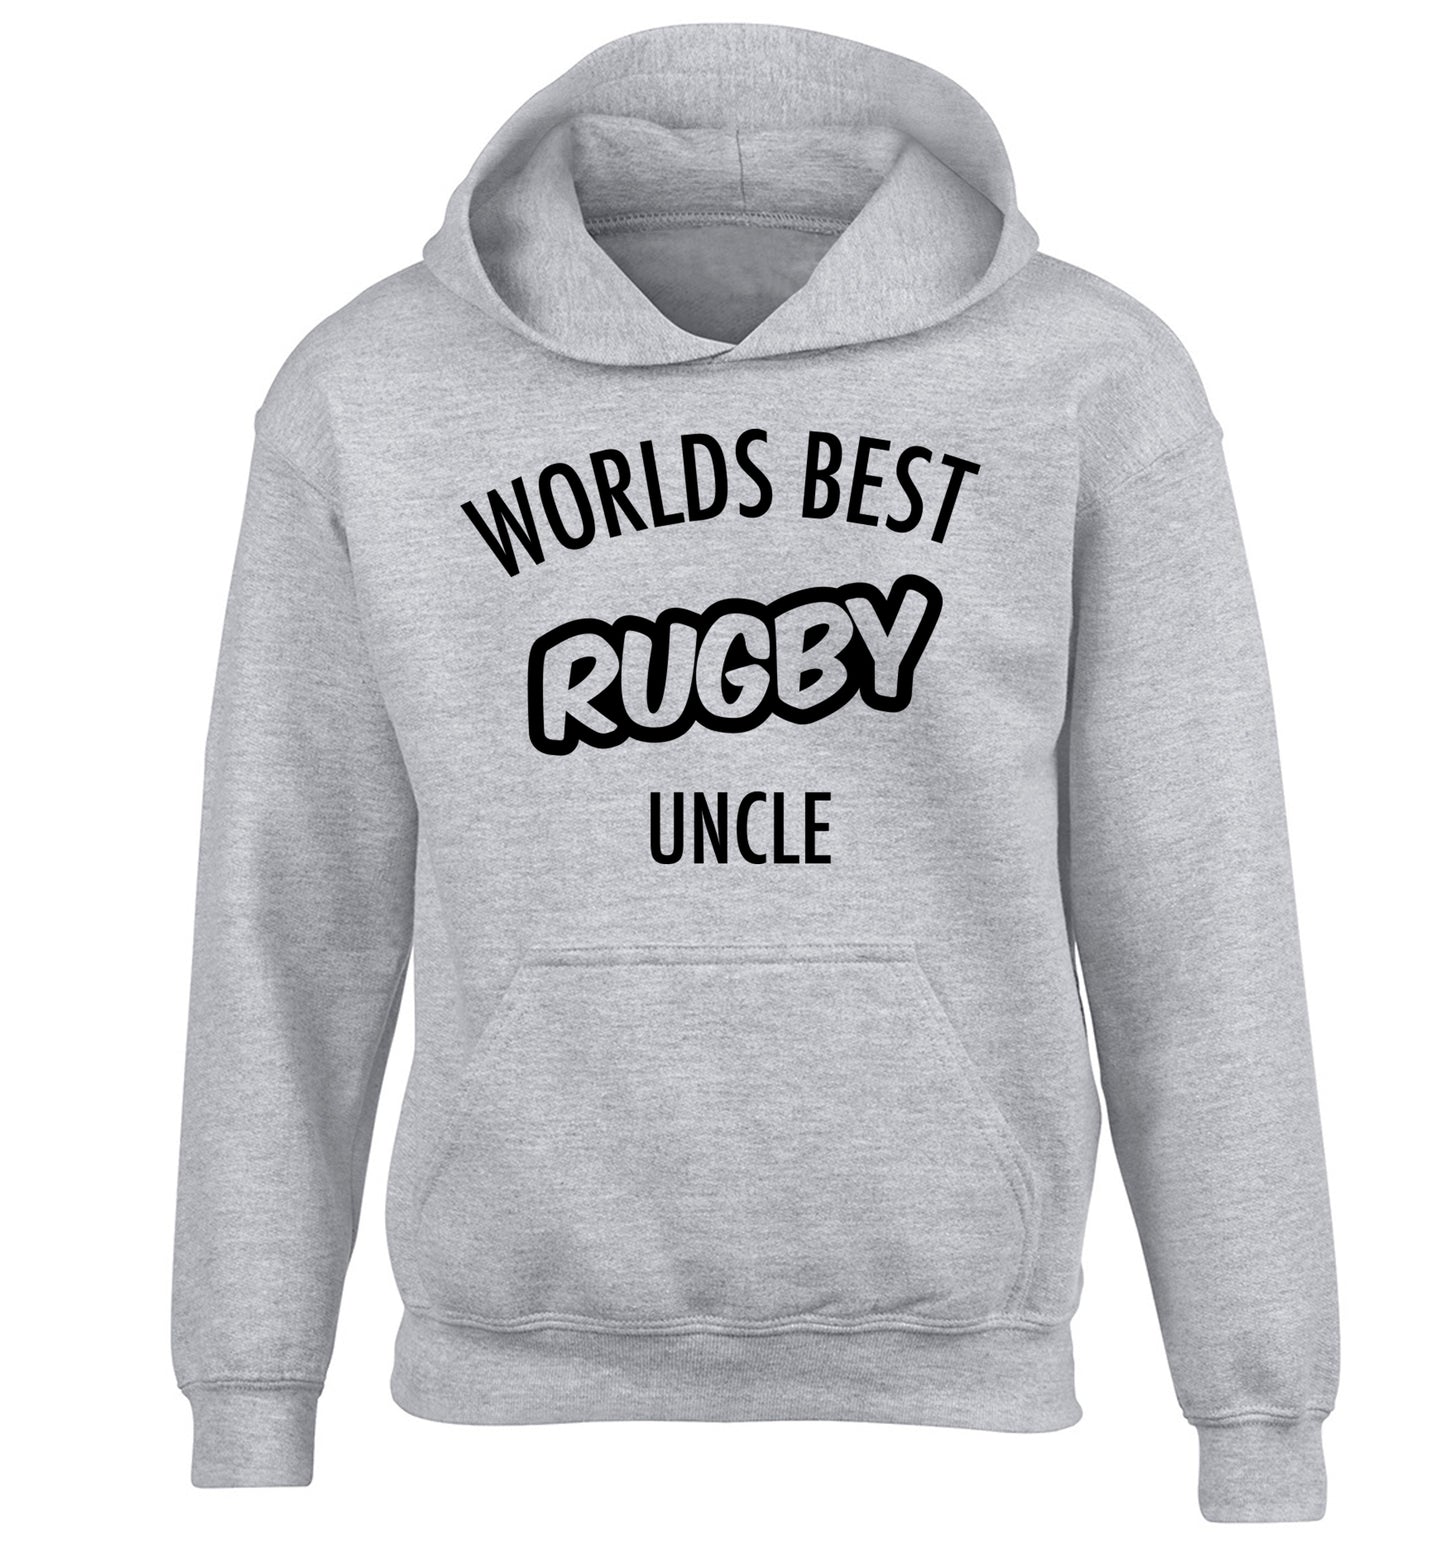 Worlds best rugby uncle children's grey hoodie 12-13 Years